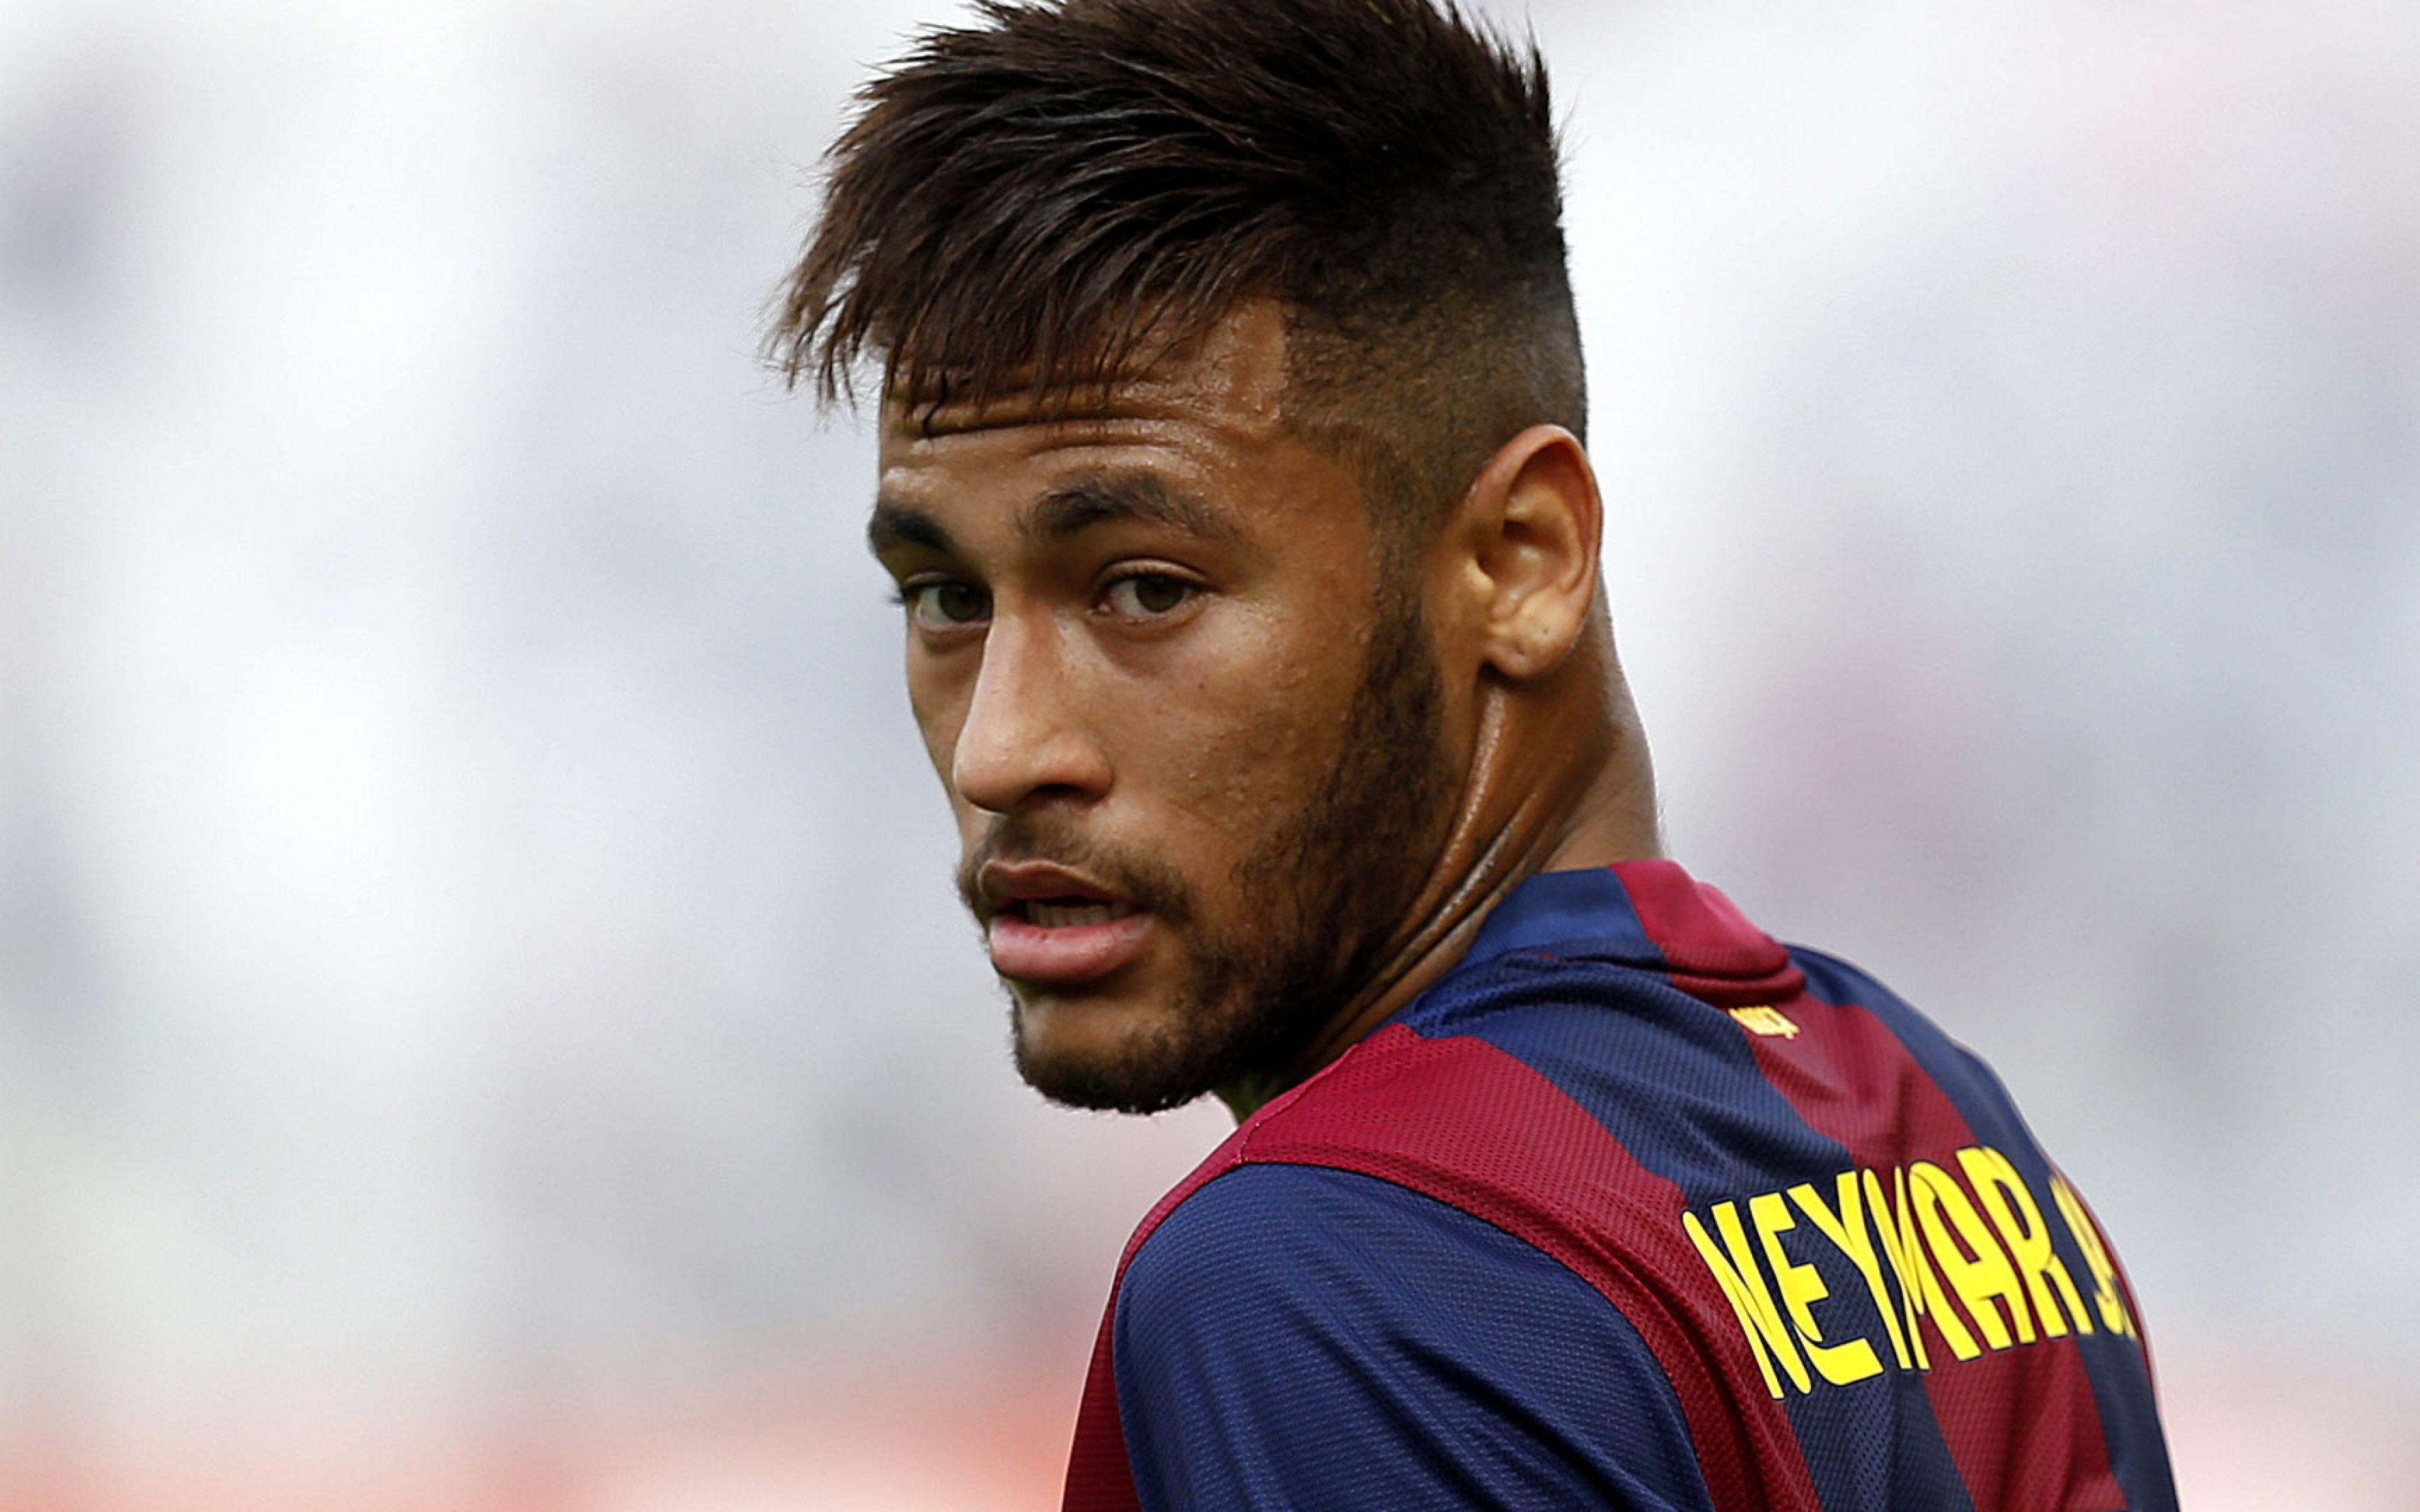 Neymar Hairstyle In 2016 - Kuora k